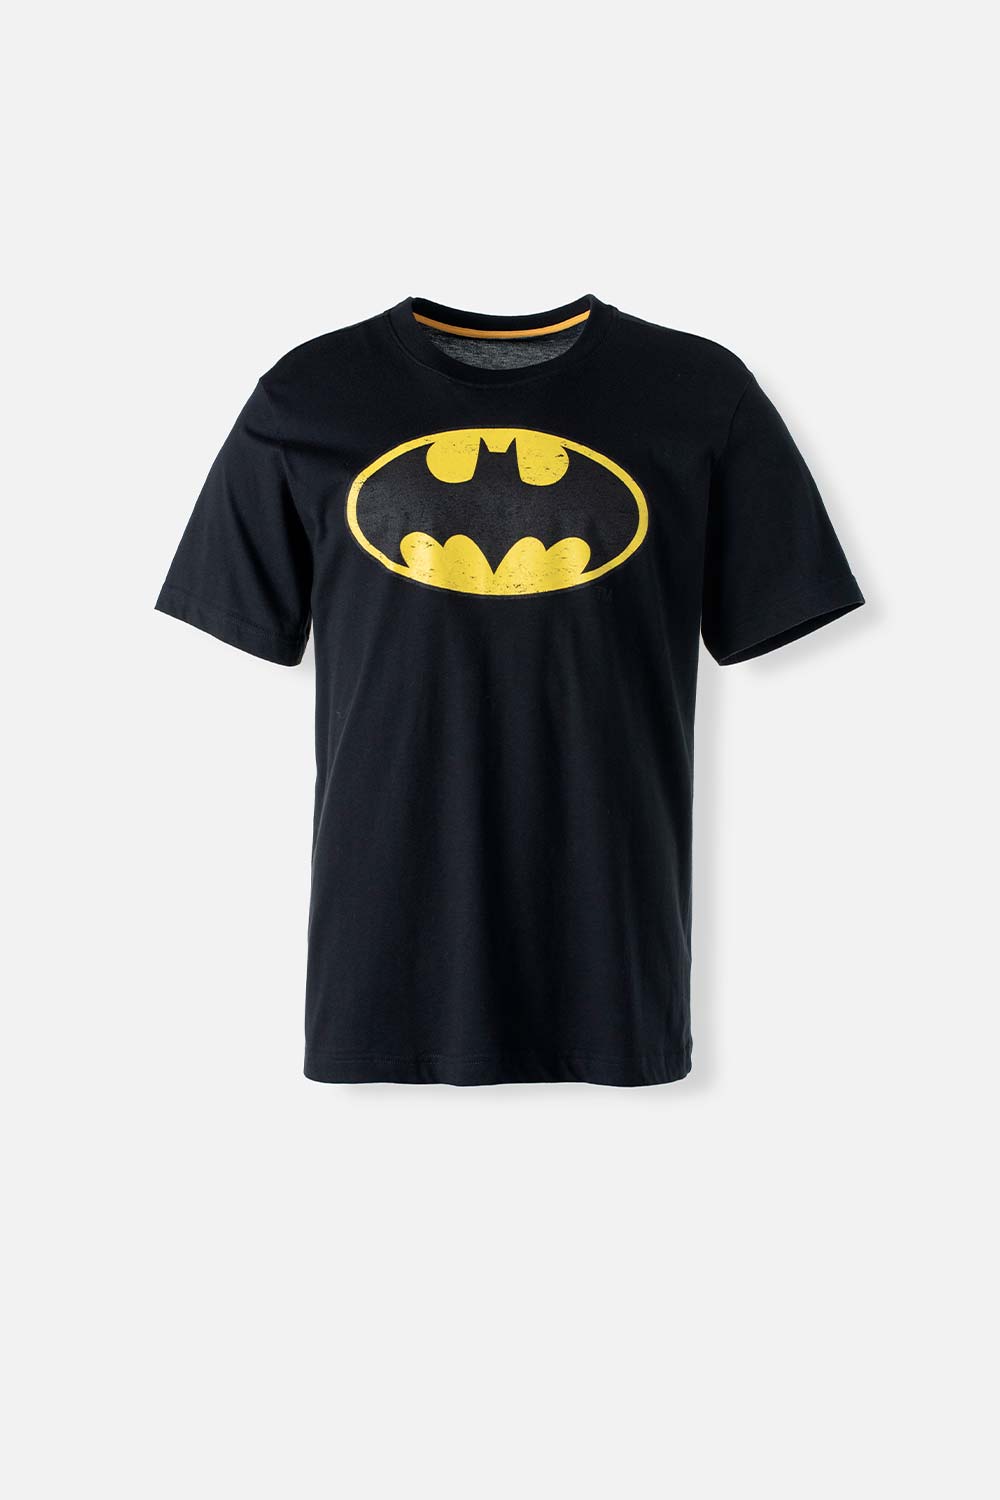 Camiseta Superman de hombre Original: Compra Online en Oferta